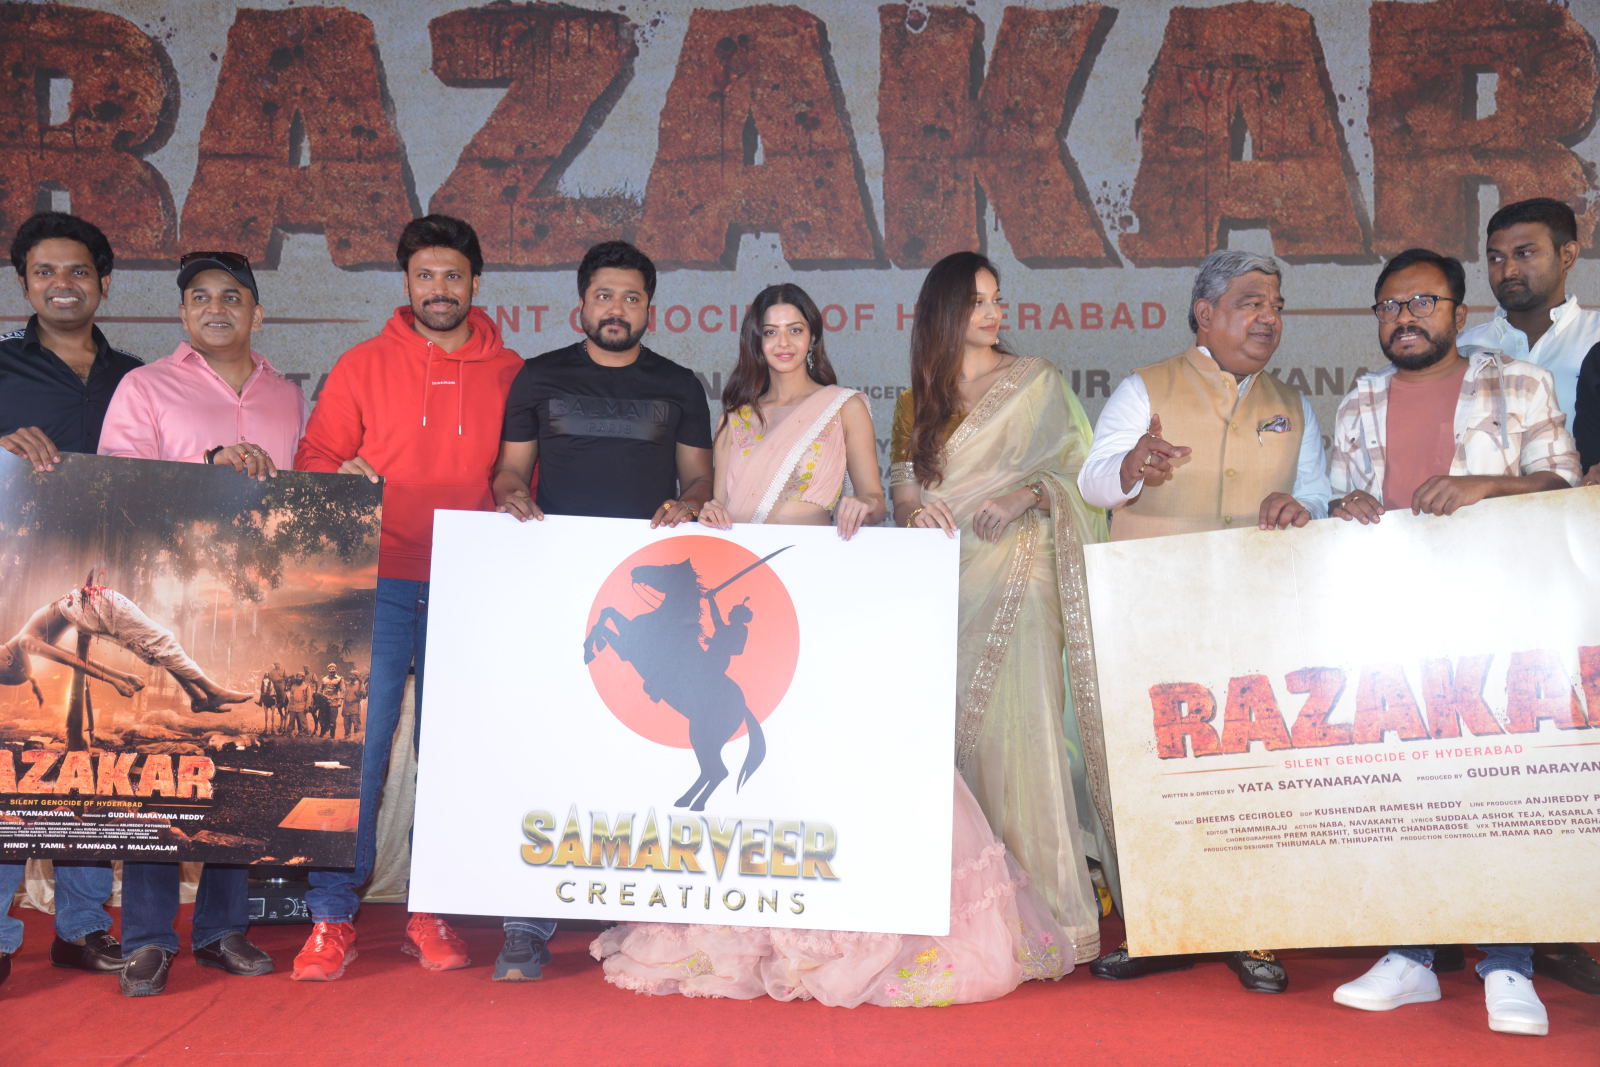 Razakar Movie Poster Launch Event Photos - Latest Movie Updates, Movie  Promotions, Branding Online and Offline Digital Marketing Services